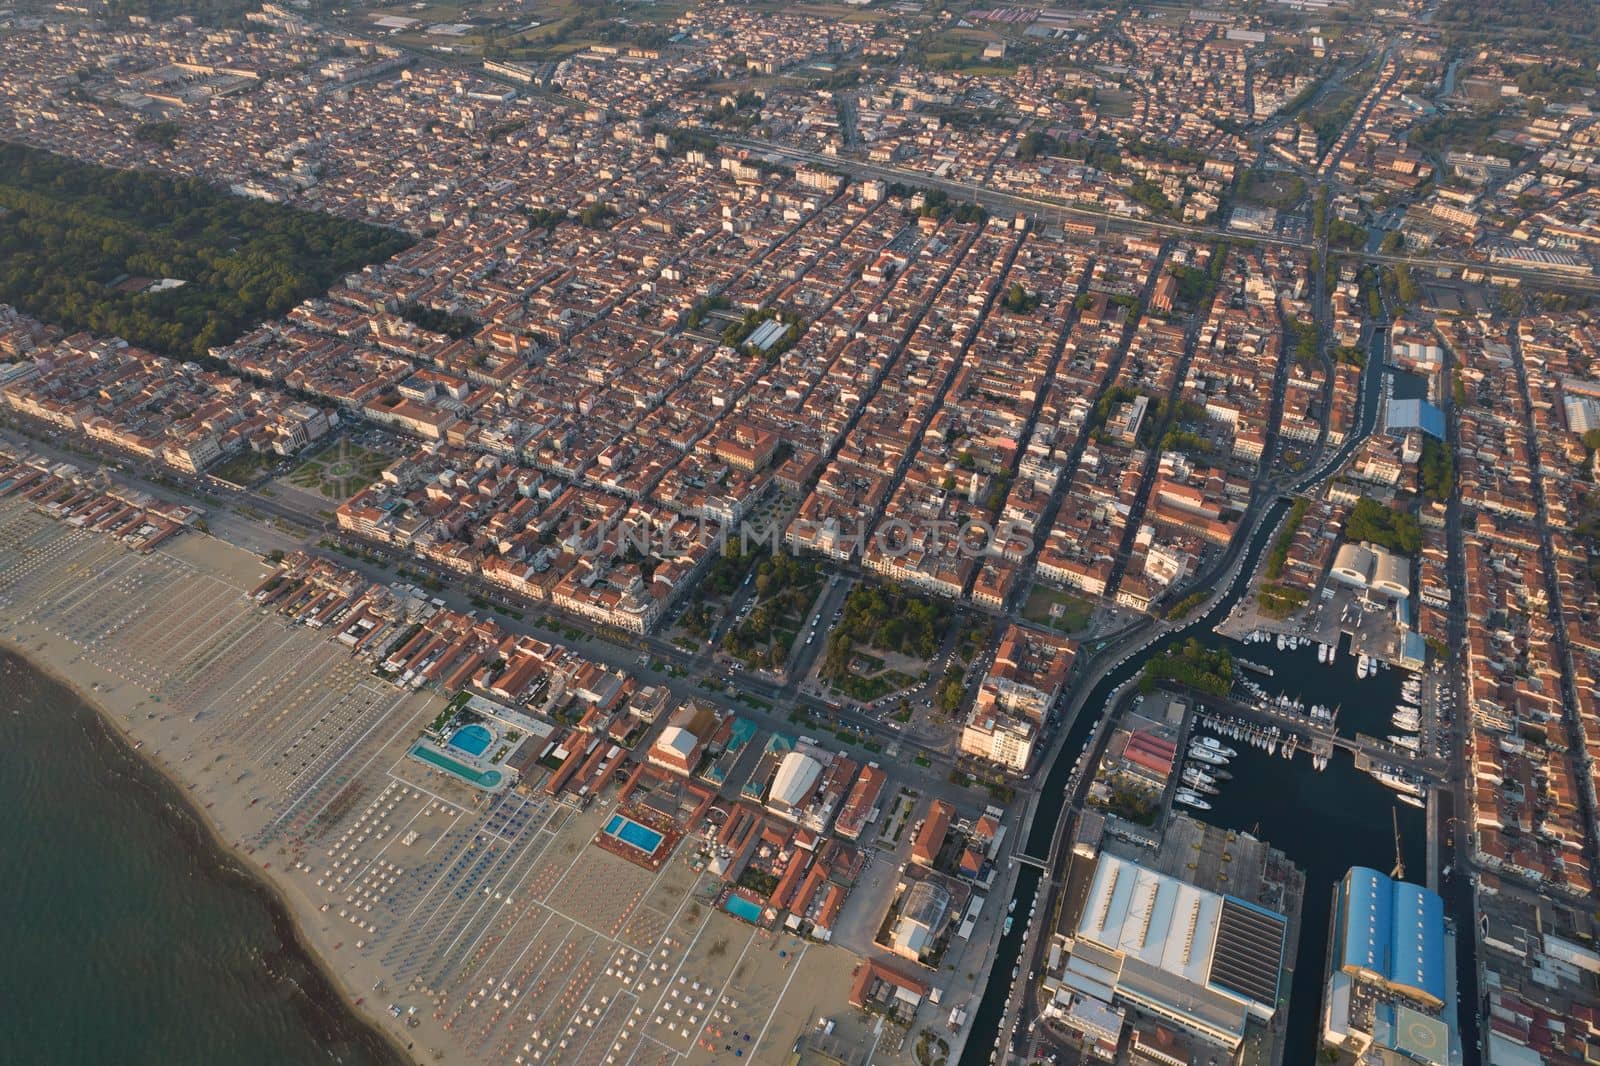 Aerial photographic documentation of the city of Viareggio Tuscany Italy 